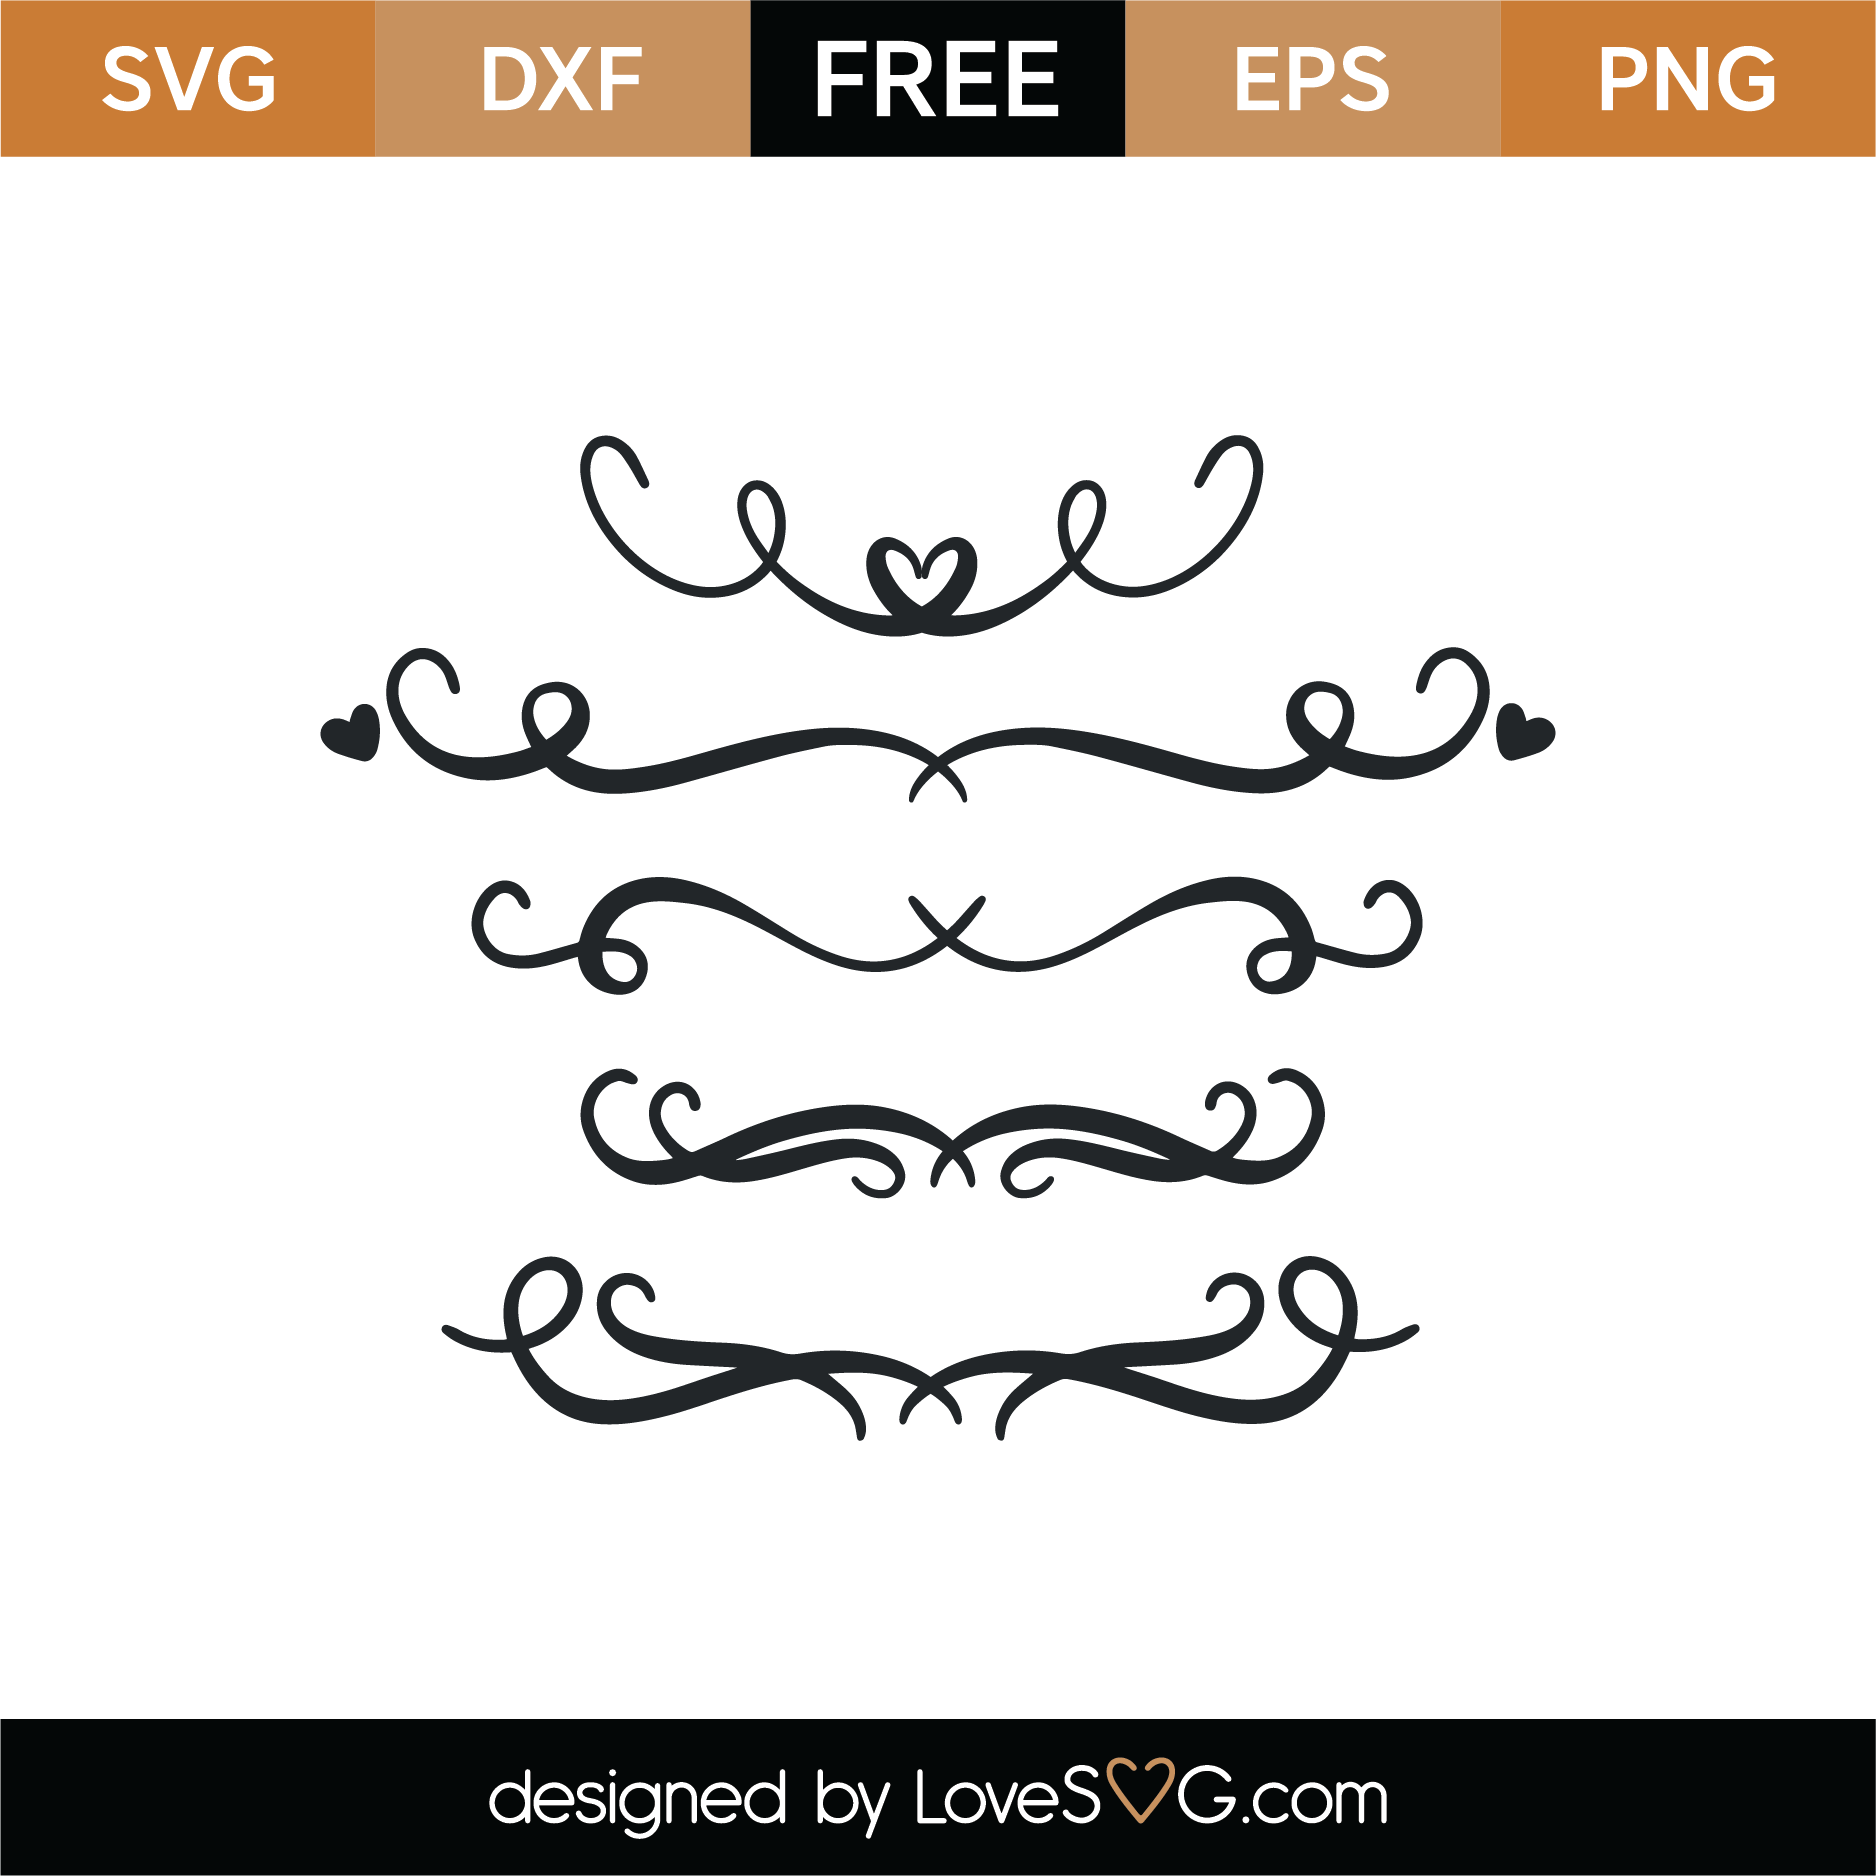 Download Free Decorative Separator SVG Cut File | Lovesvg.com